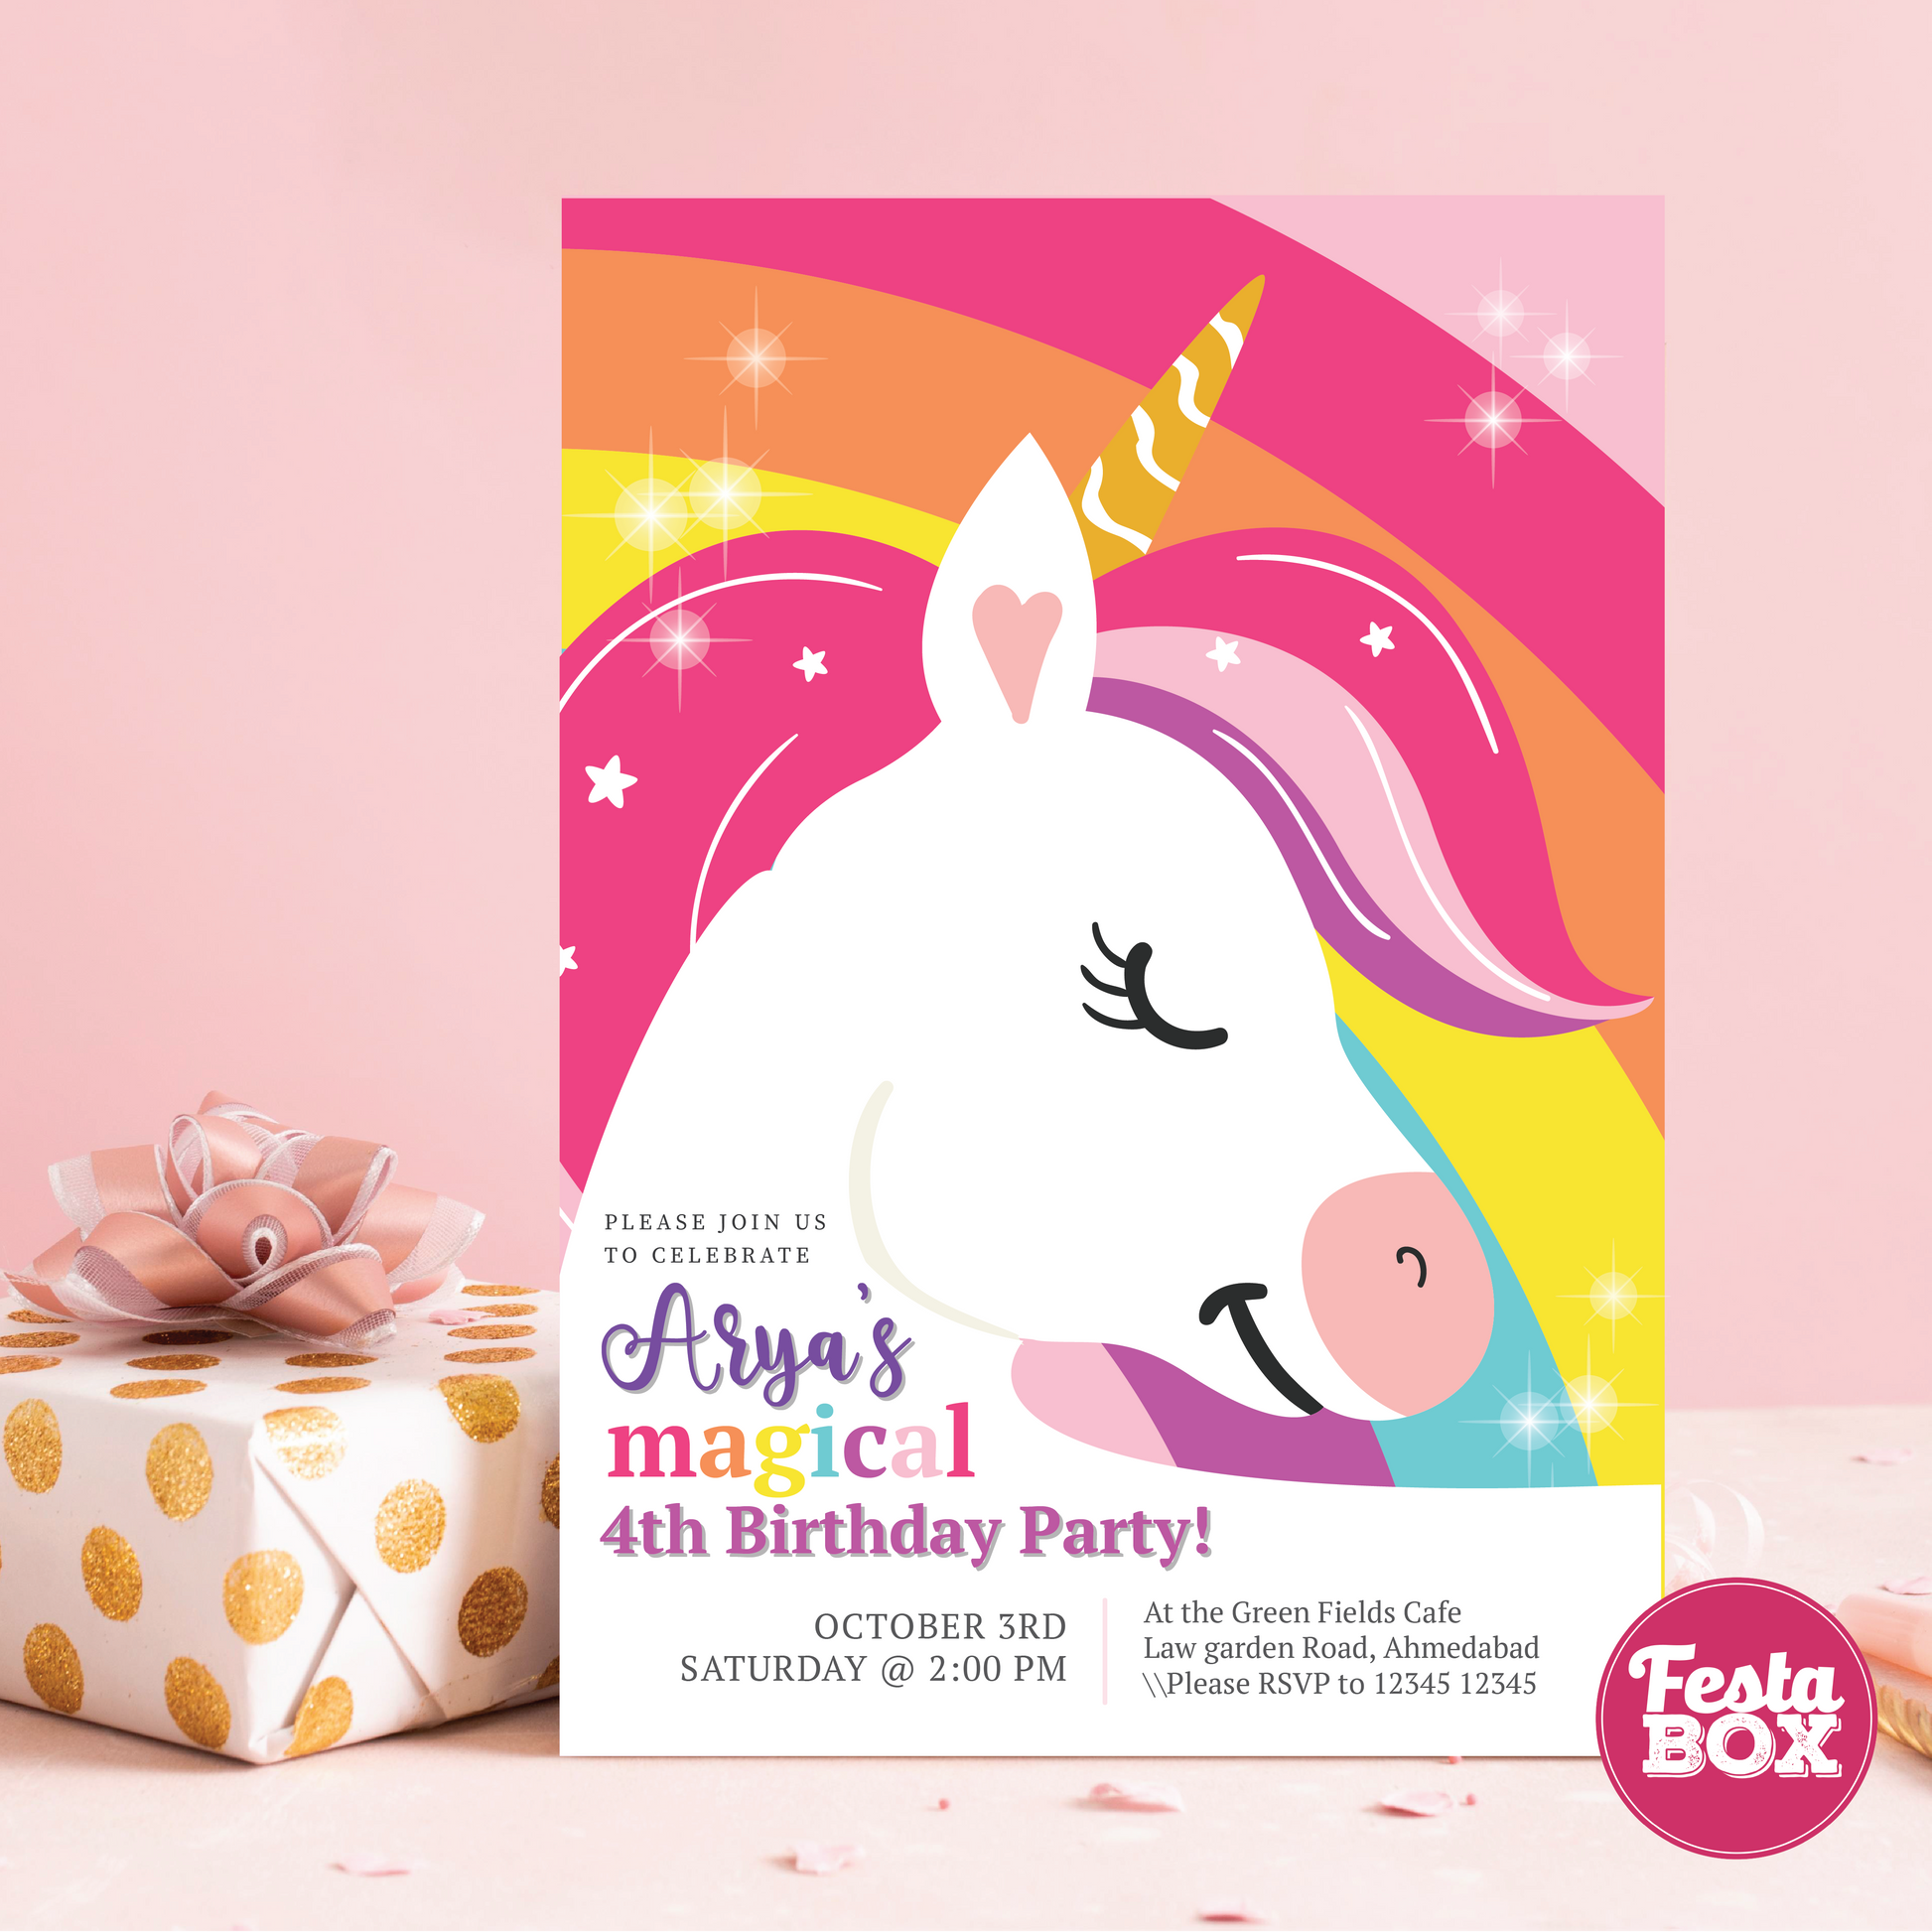 Birthday Invitation under the Unicorn Theme by Festabox for Birthday Party Decorations